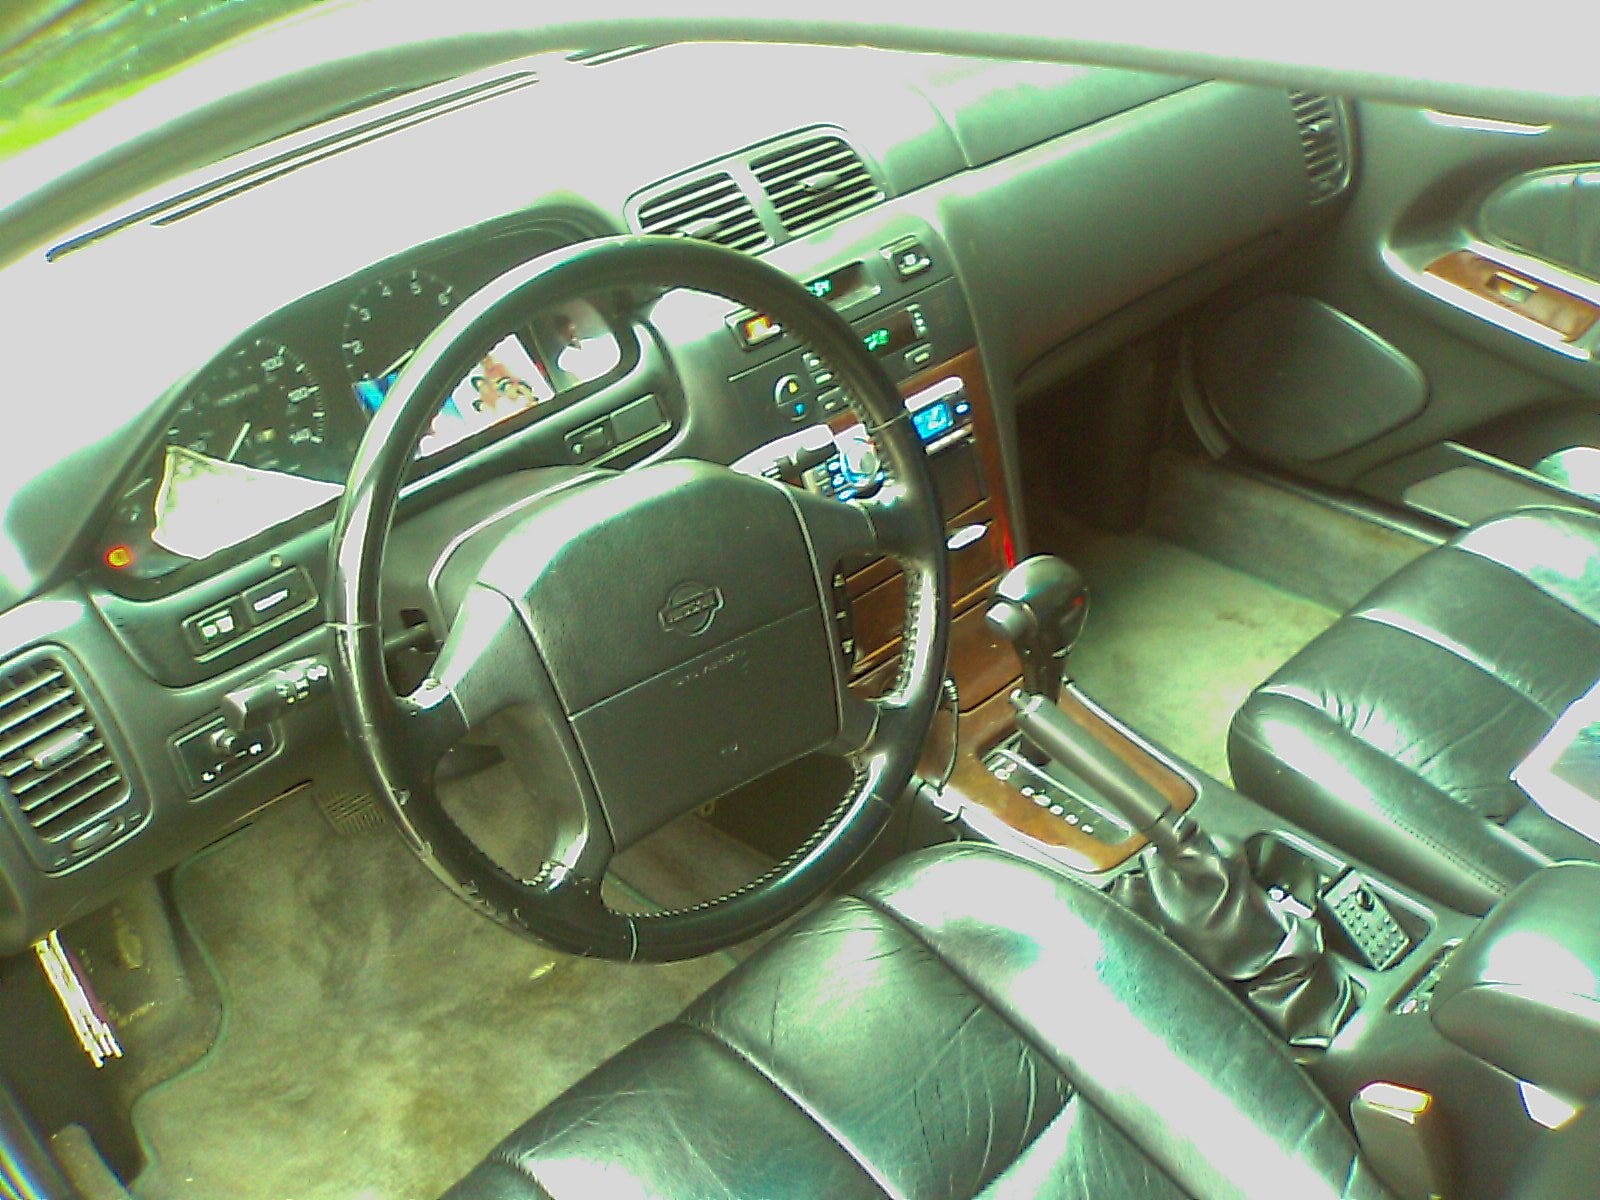 1996 Nissan maxima interior #3